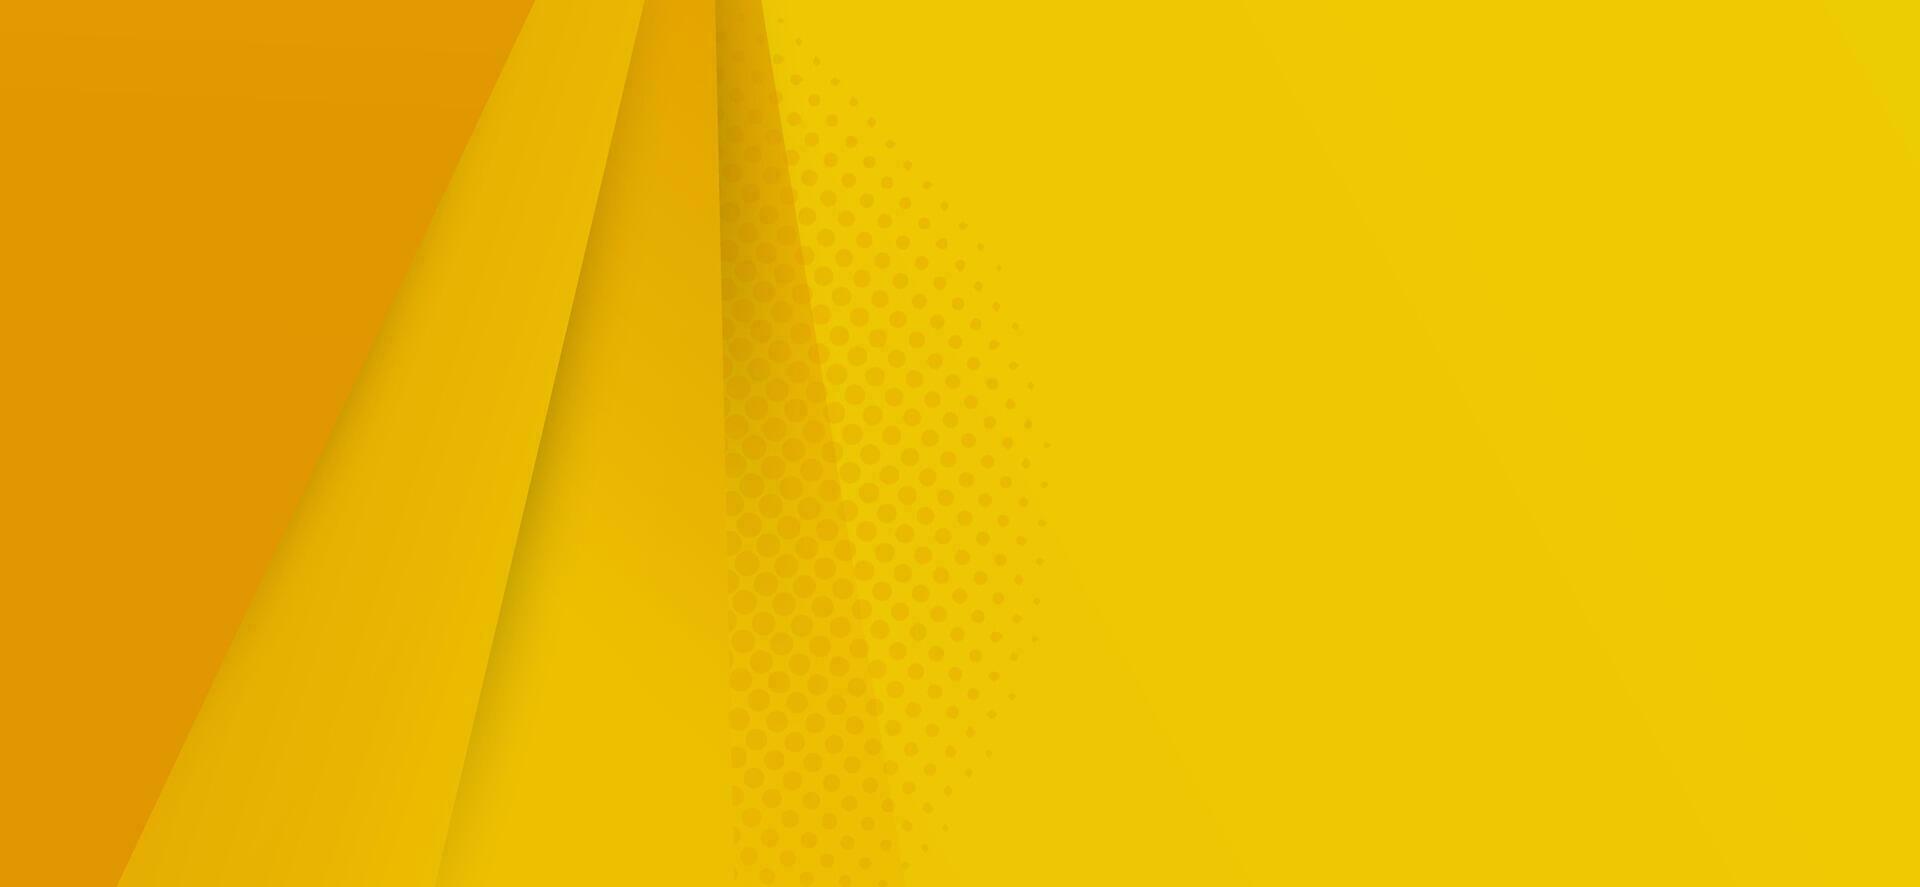 amarillo y azul hipster futurista gráfico. con amarillo antecedentes usado en textura diseño, un de moda resumen antecedentes diseño en vector